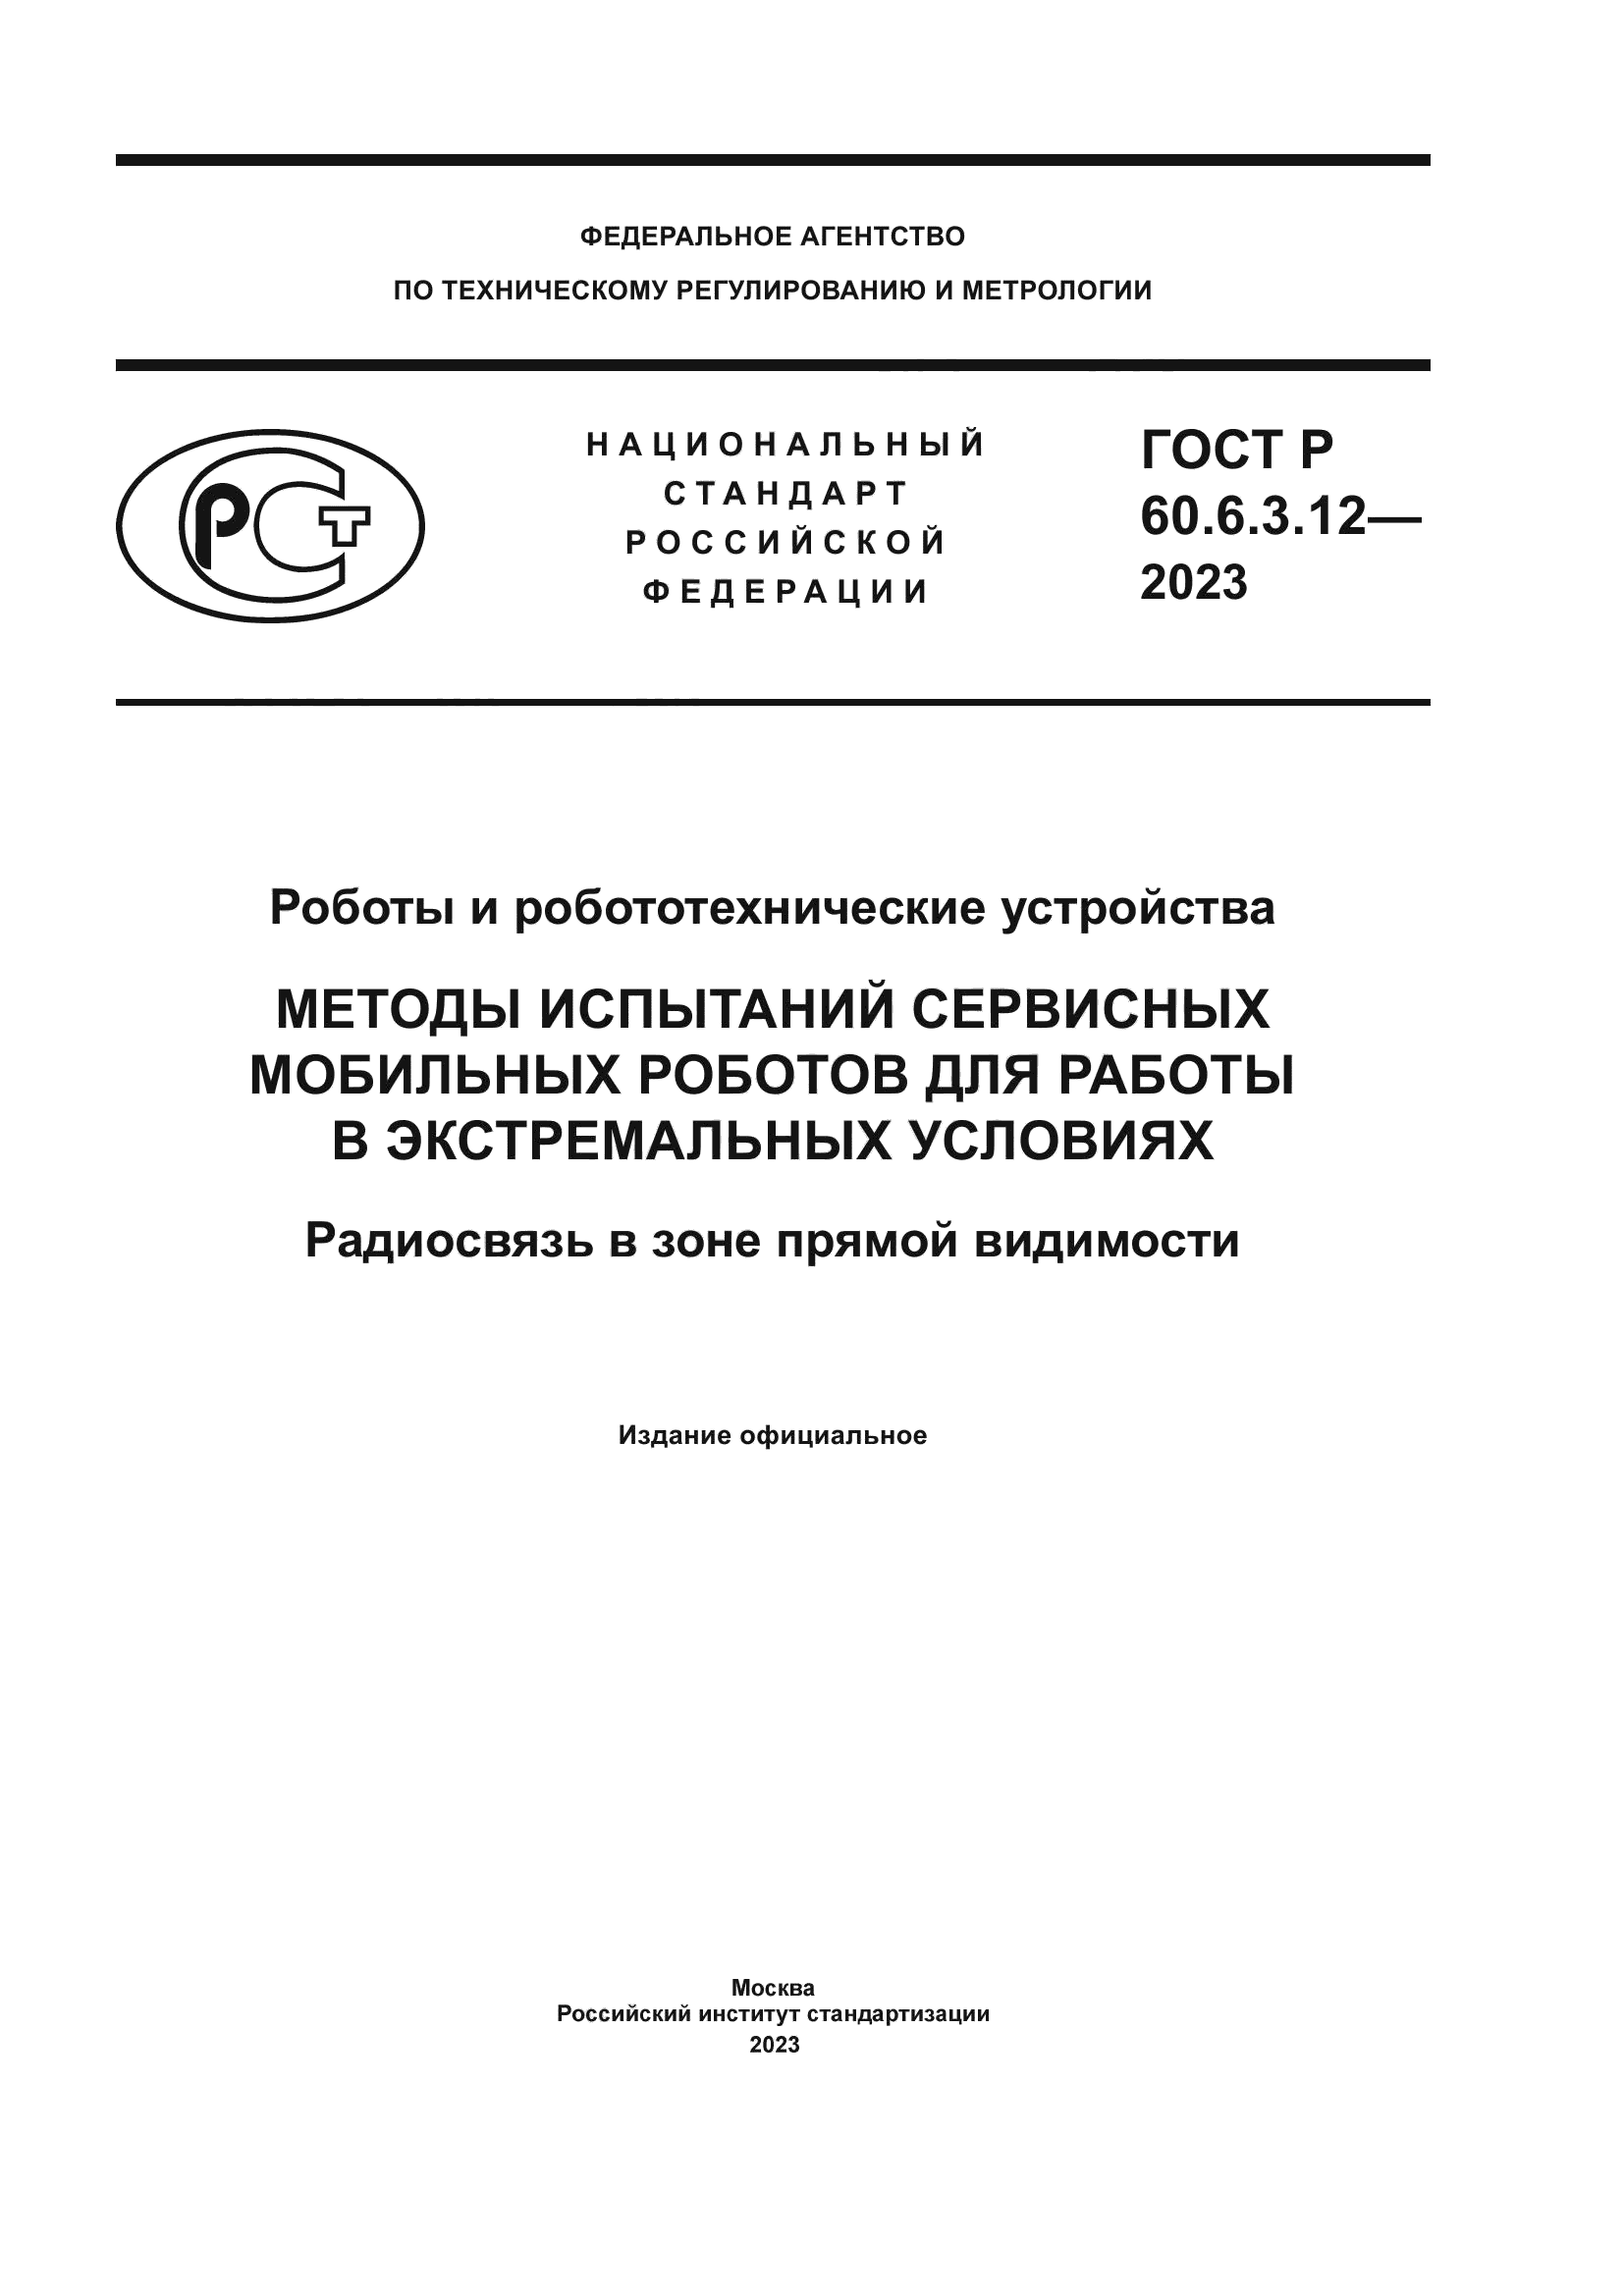 ГОСТ Р 60.6.3.12-2023